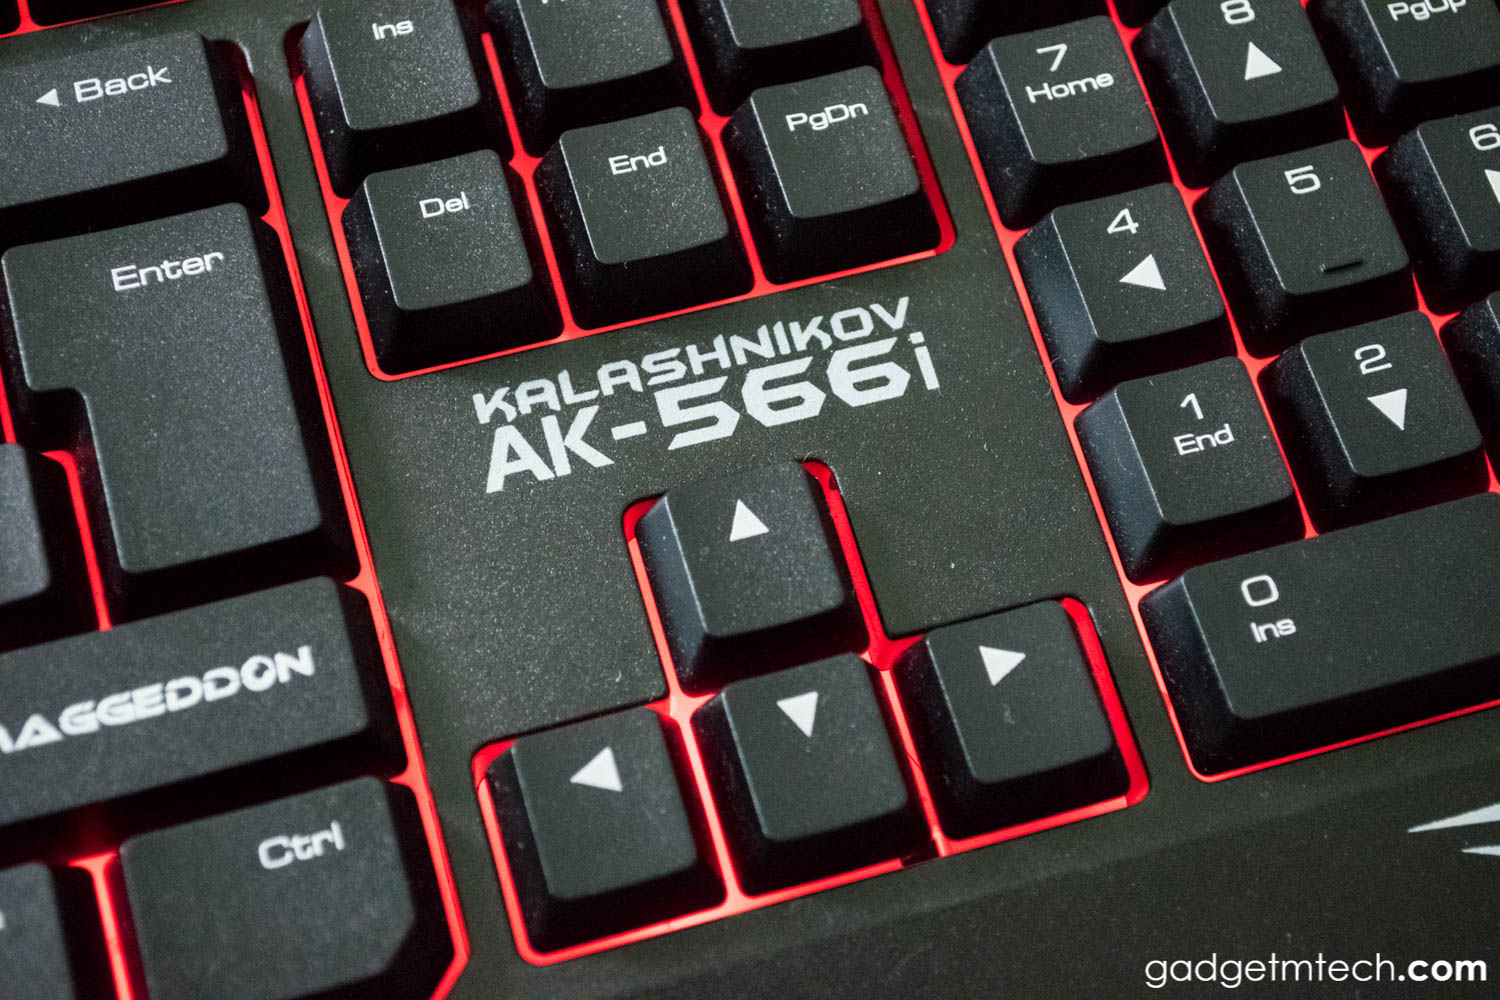 Armaggeddon Kalashnikov AK-566i Review: A Better Spill-Proof Keyboard